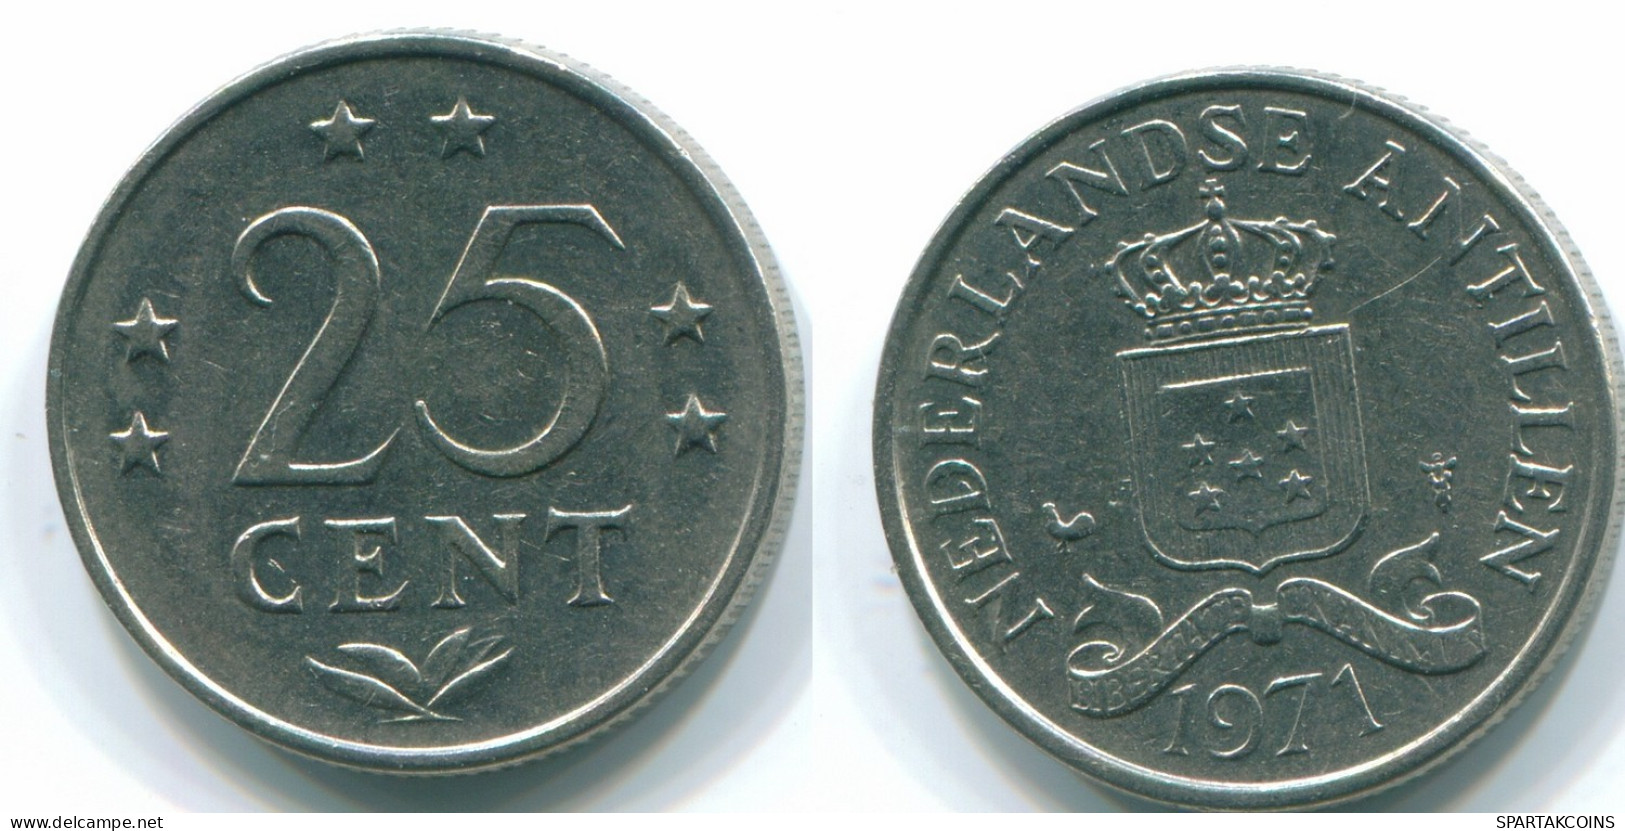 25 CENTS 1971 NIEDERLÄNDISCHE ANTILLEN Nickel Koloniale Münze #S11589.D.A - Netherlands Antilles